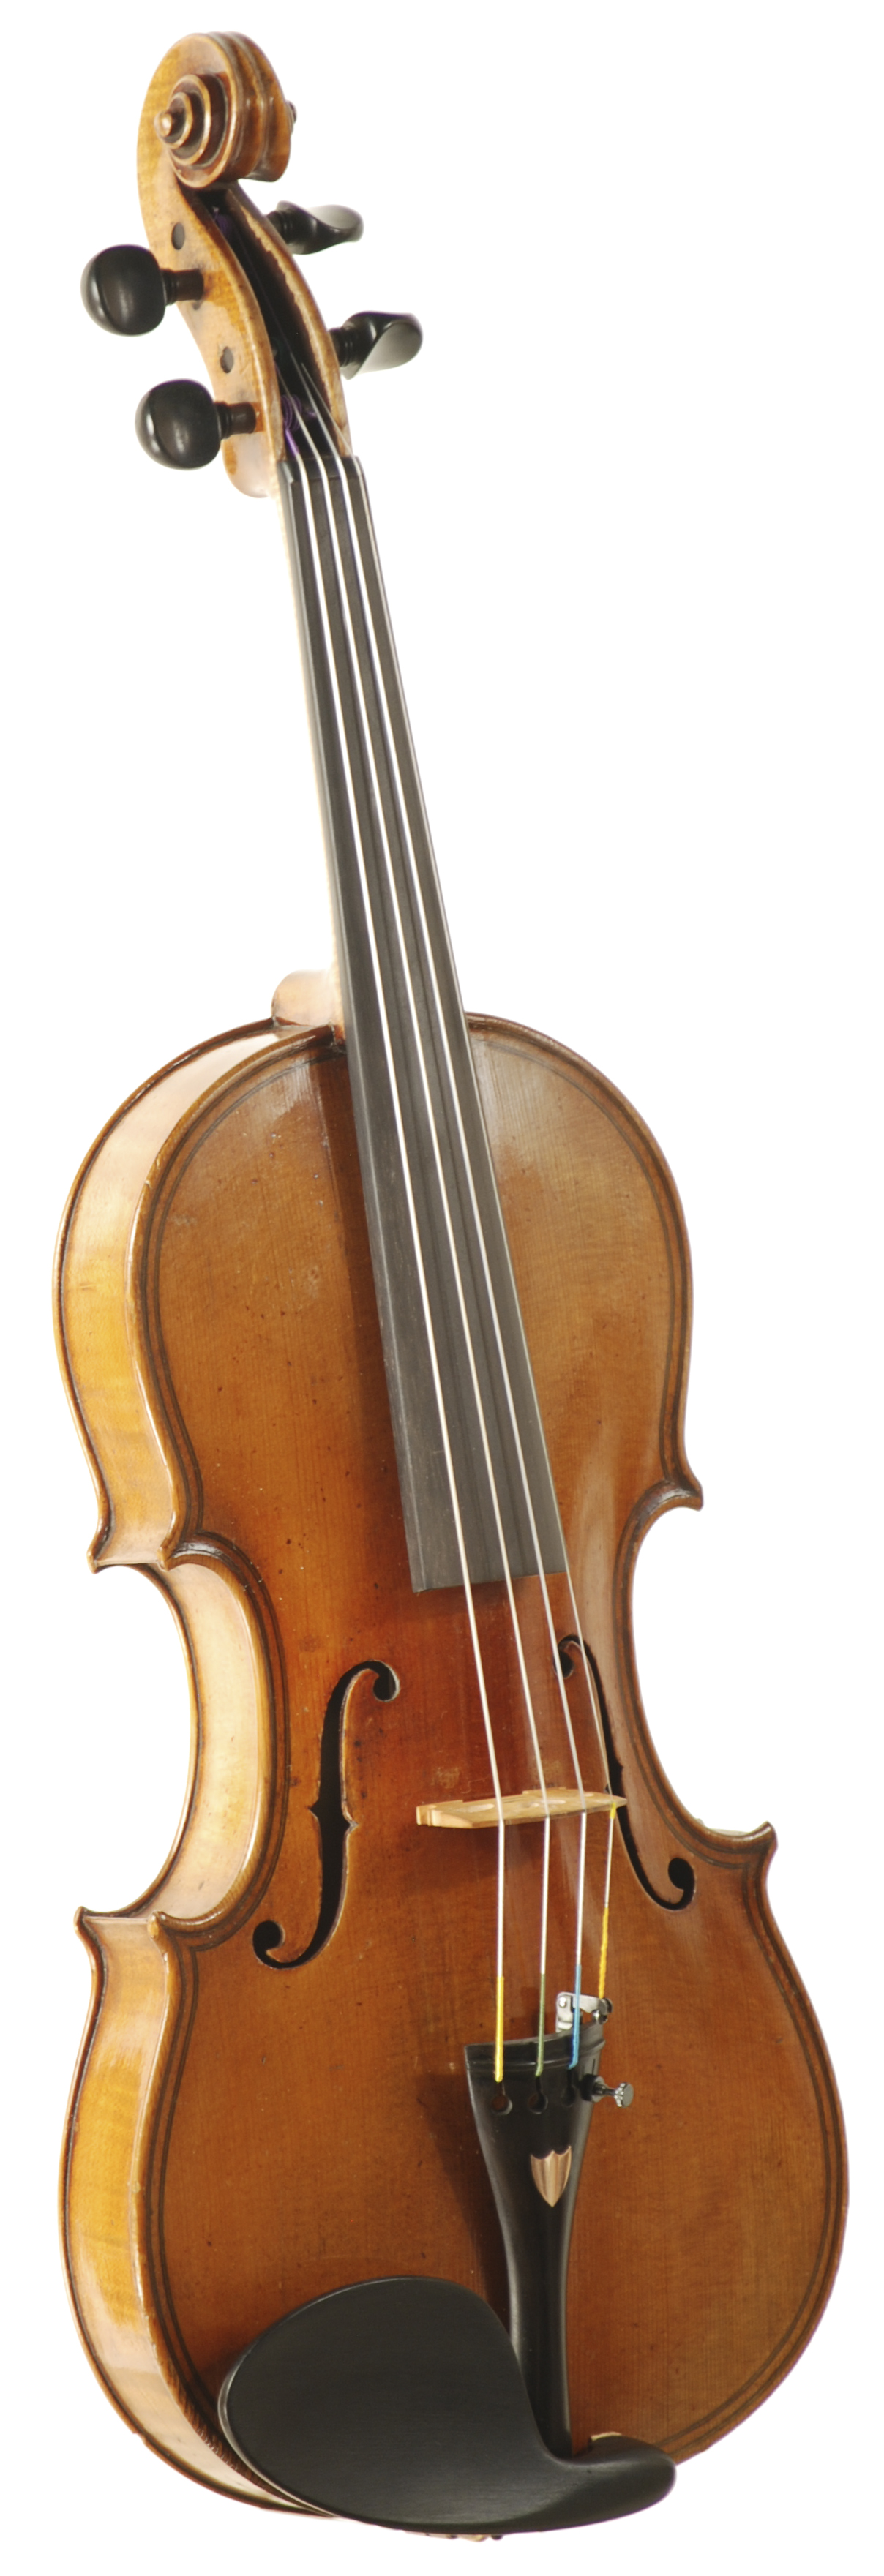 Giovan Paolo Maggini – Trade Violin, Circa | J.R. Judd Violins